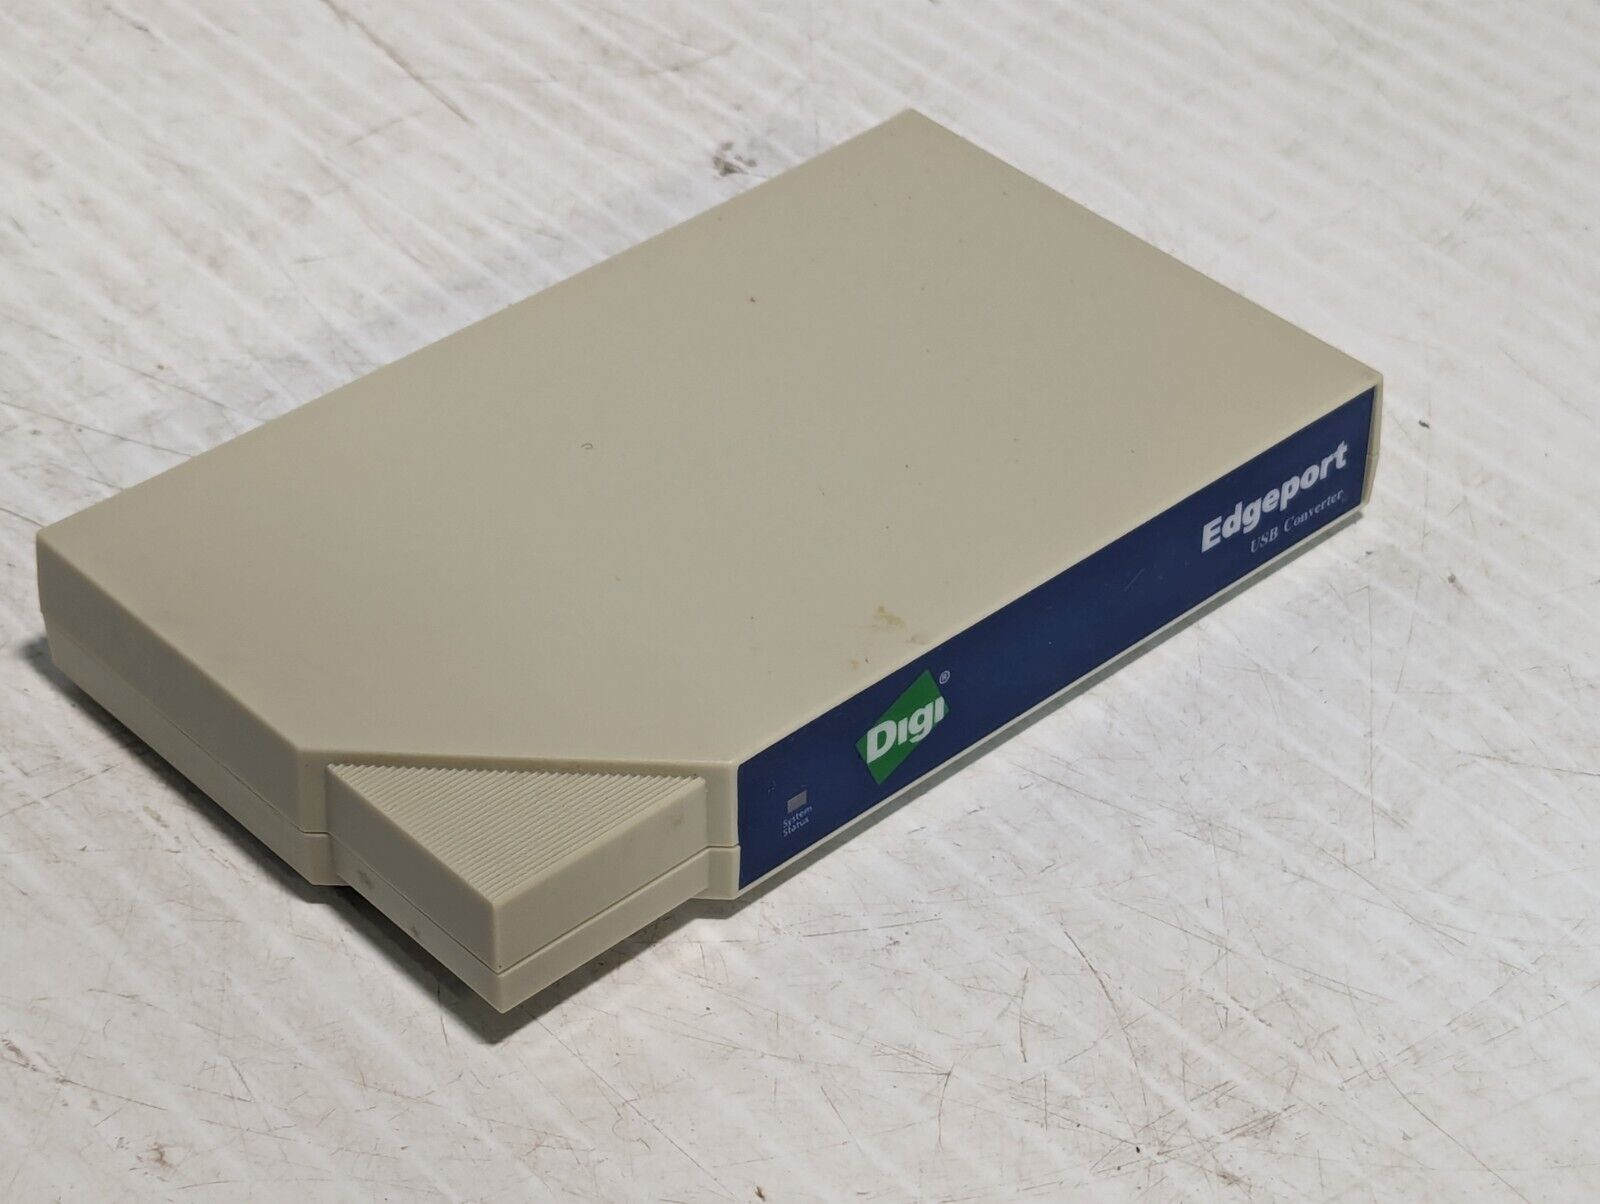 Digi Edgeport/4 301-1000-95 USB Converter, 4 RS-232 DB9 ports - 